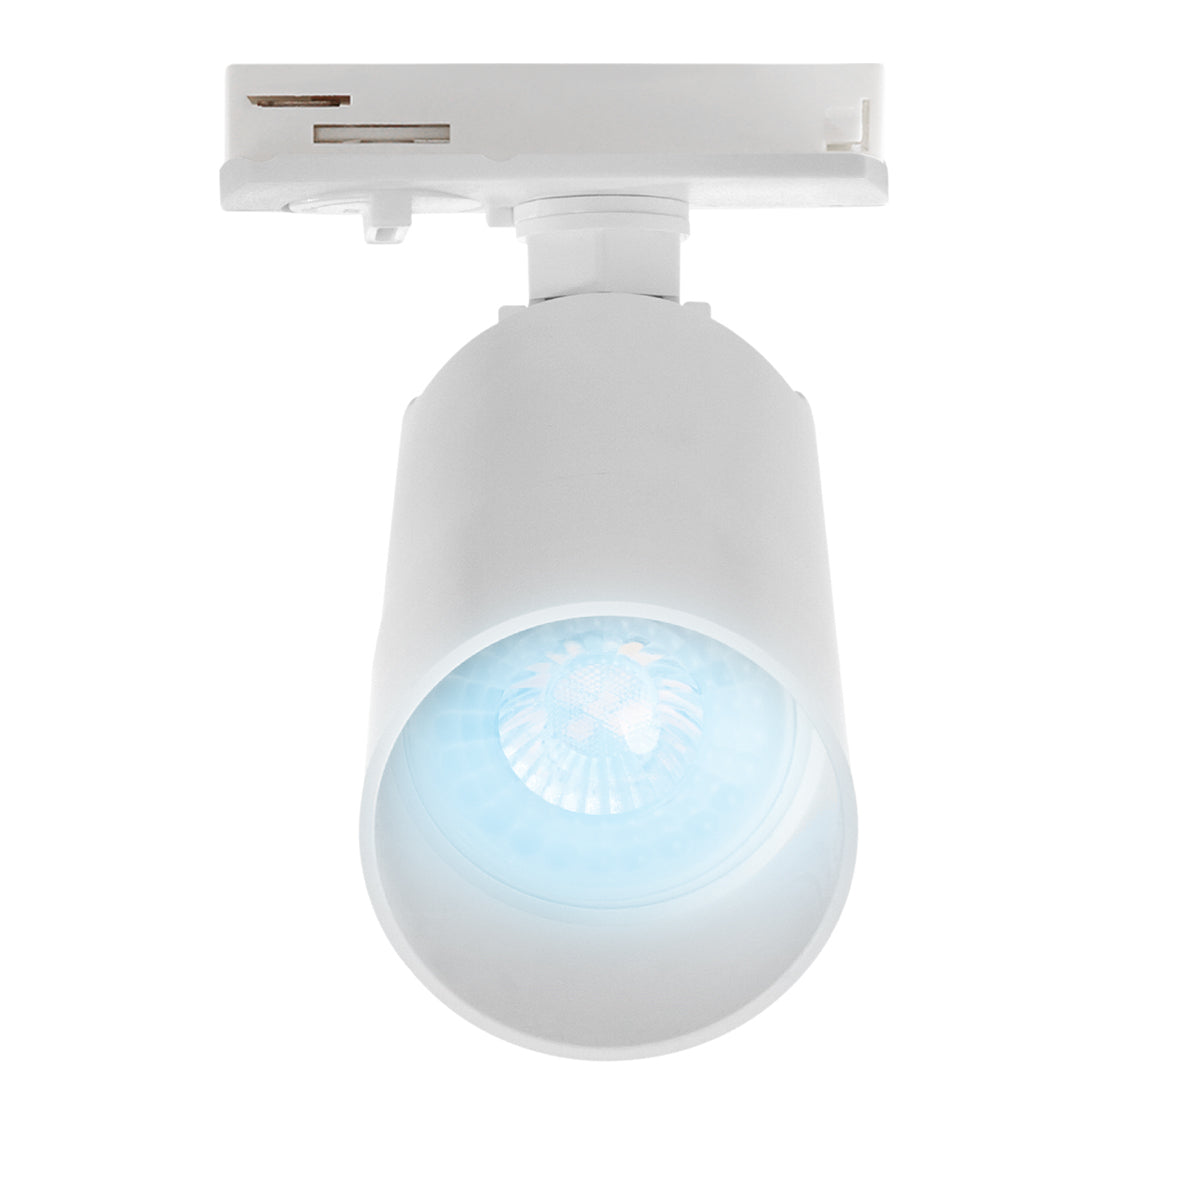 Luminaria LED tipo spot para riel, Modelo TL-2911.R Illux